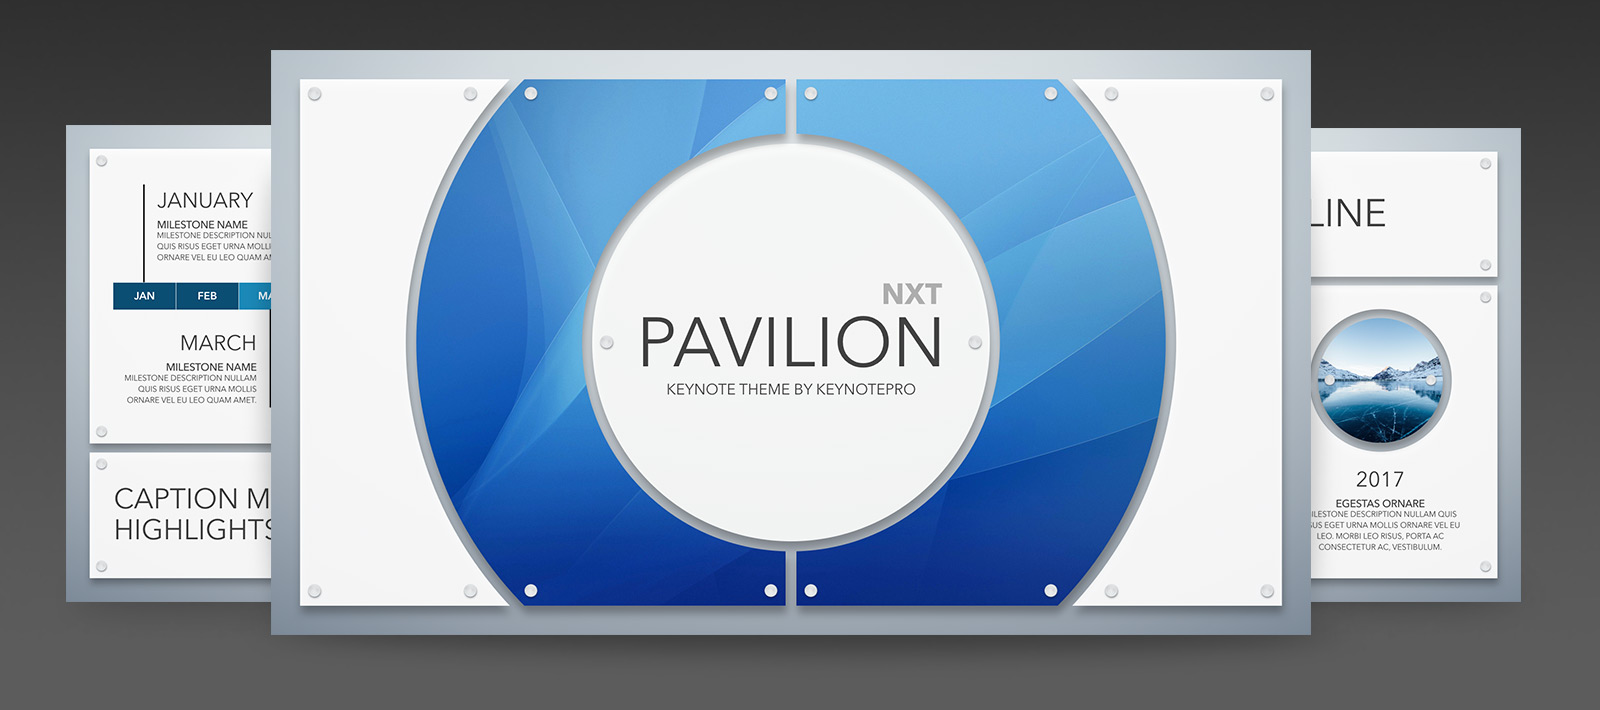 Pavilion NXT for Keynote